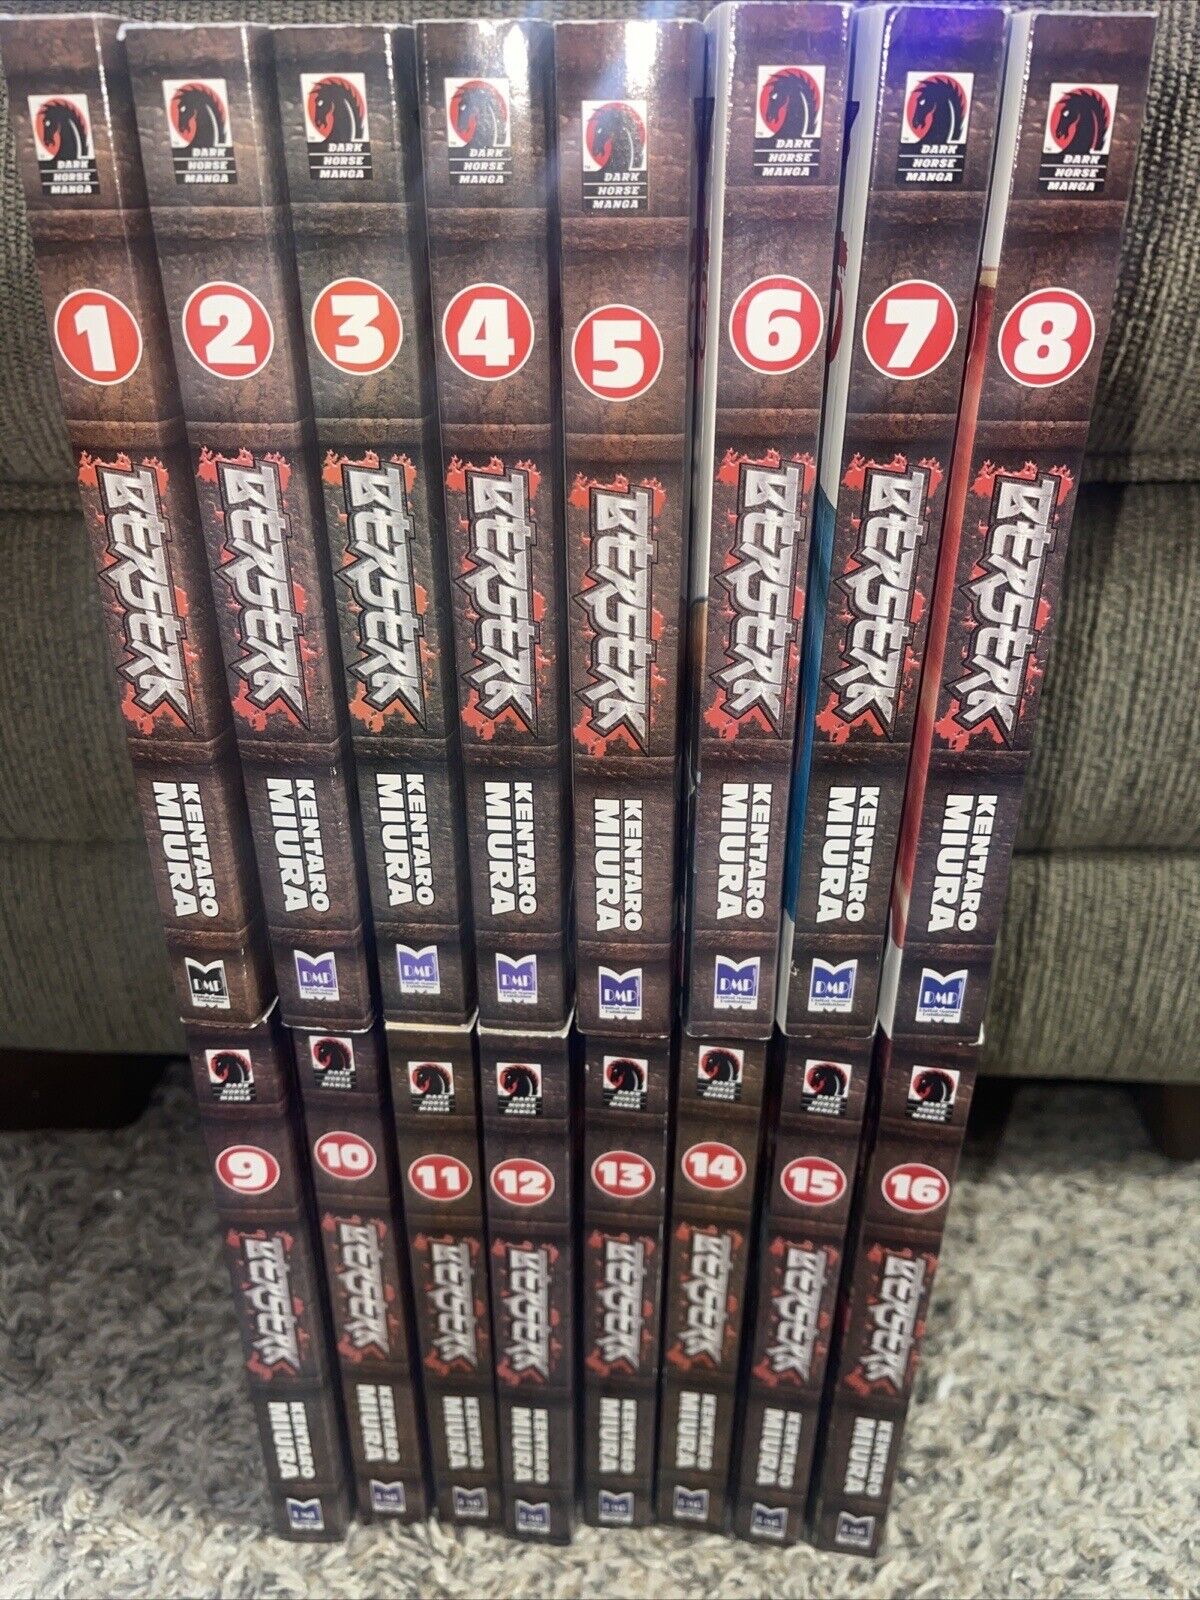 Berserk Manga Vol 1-16 All First Edition Great Condition English Language